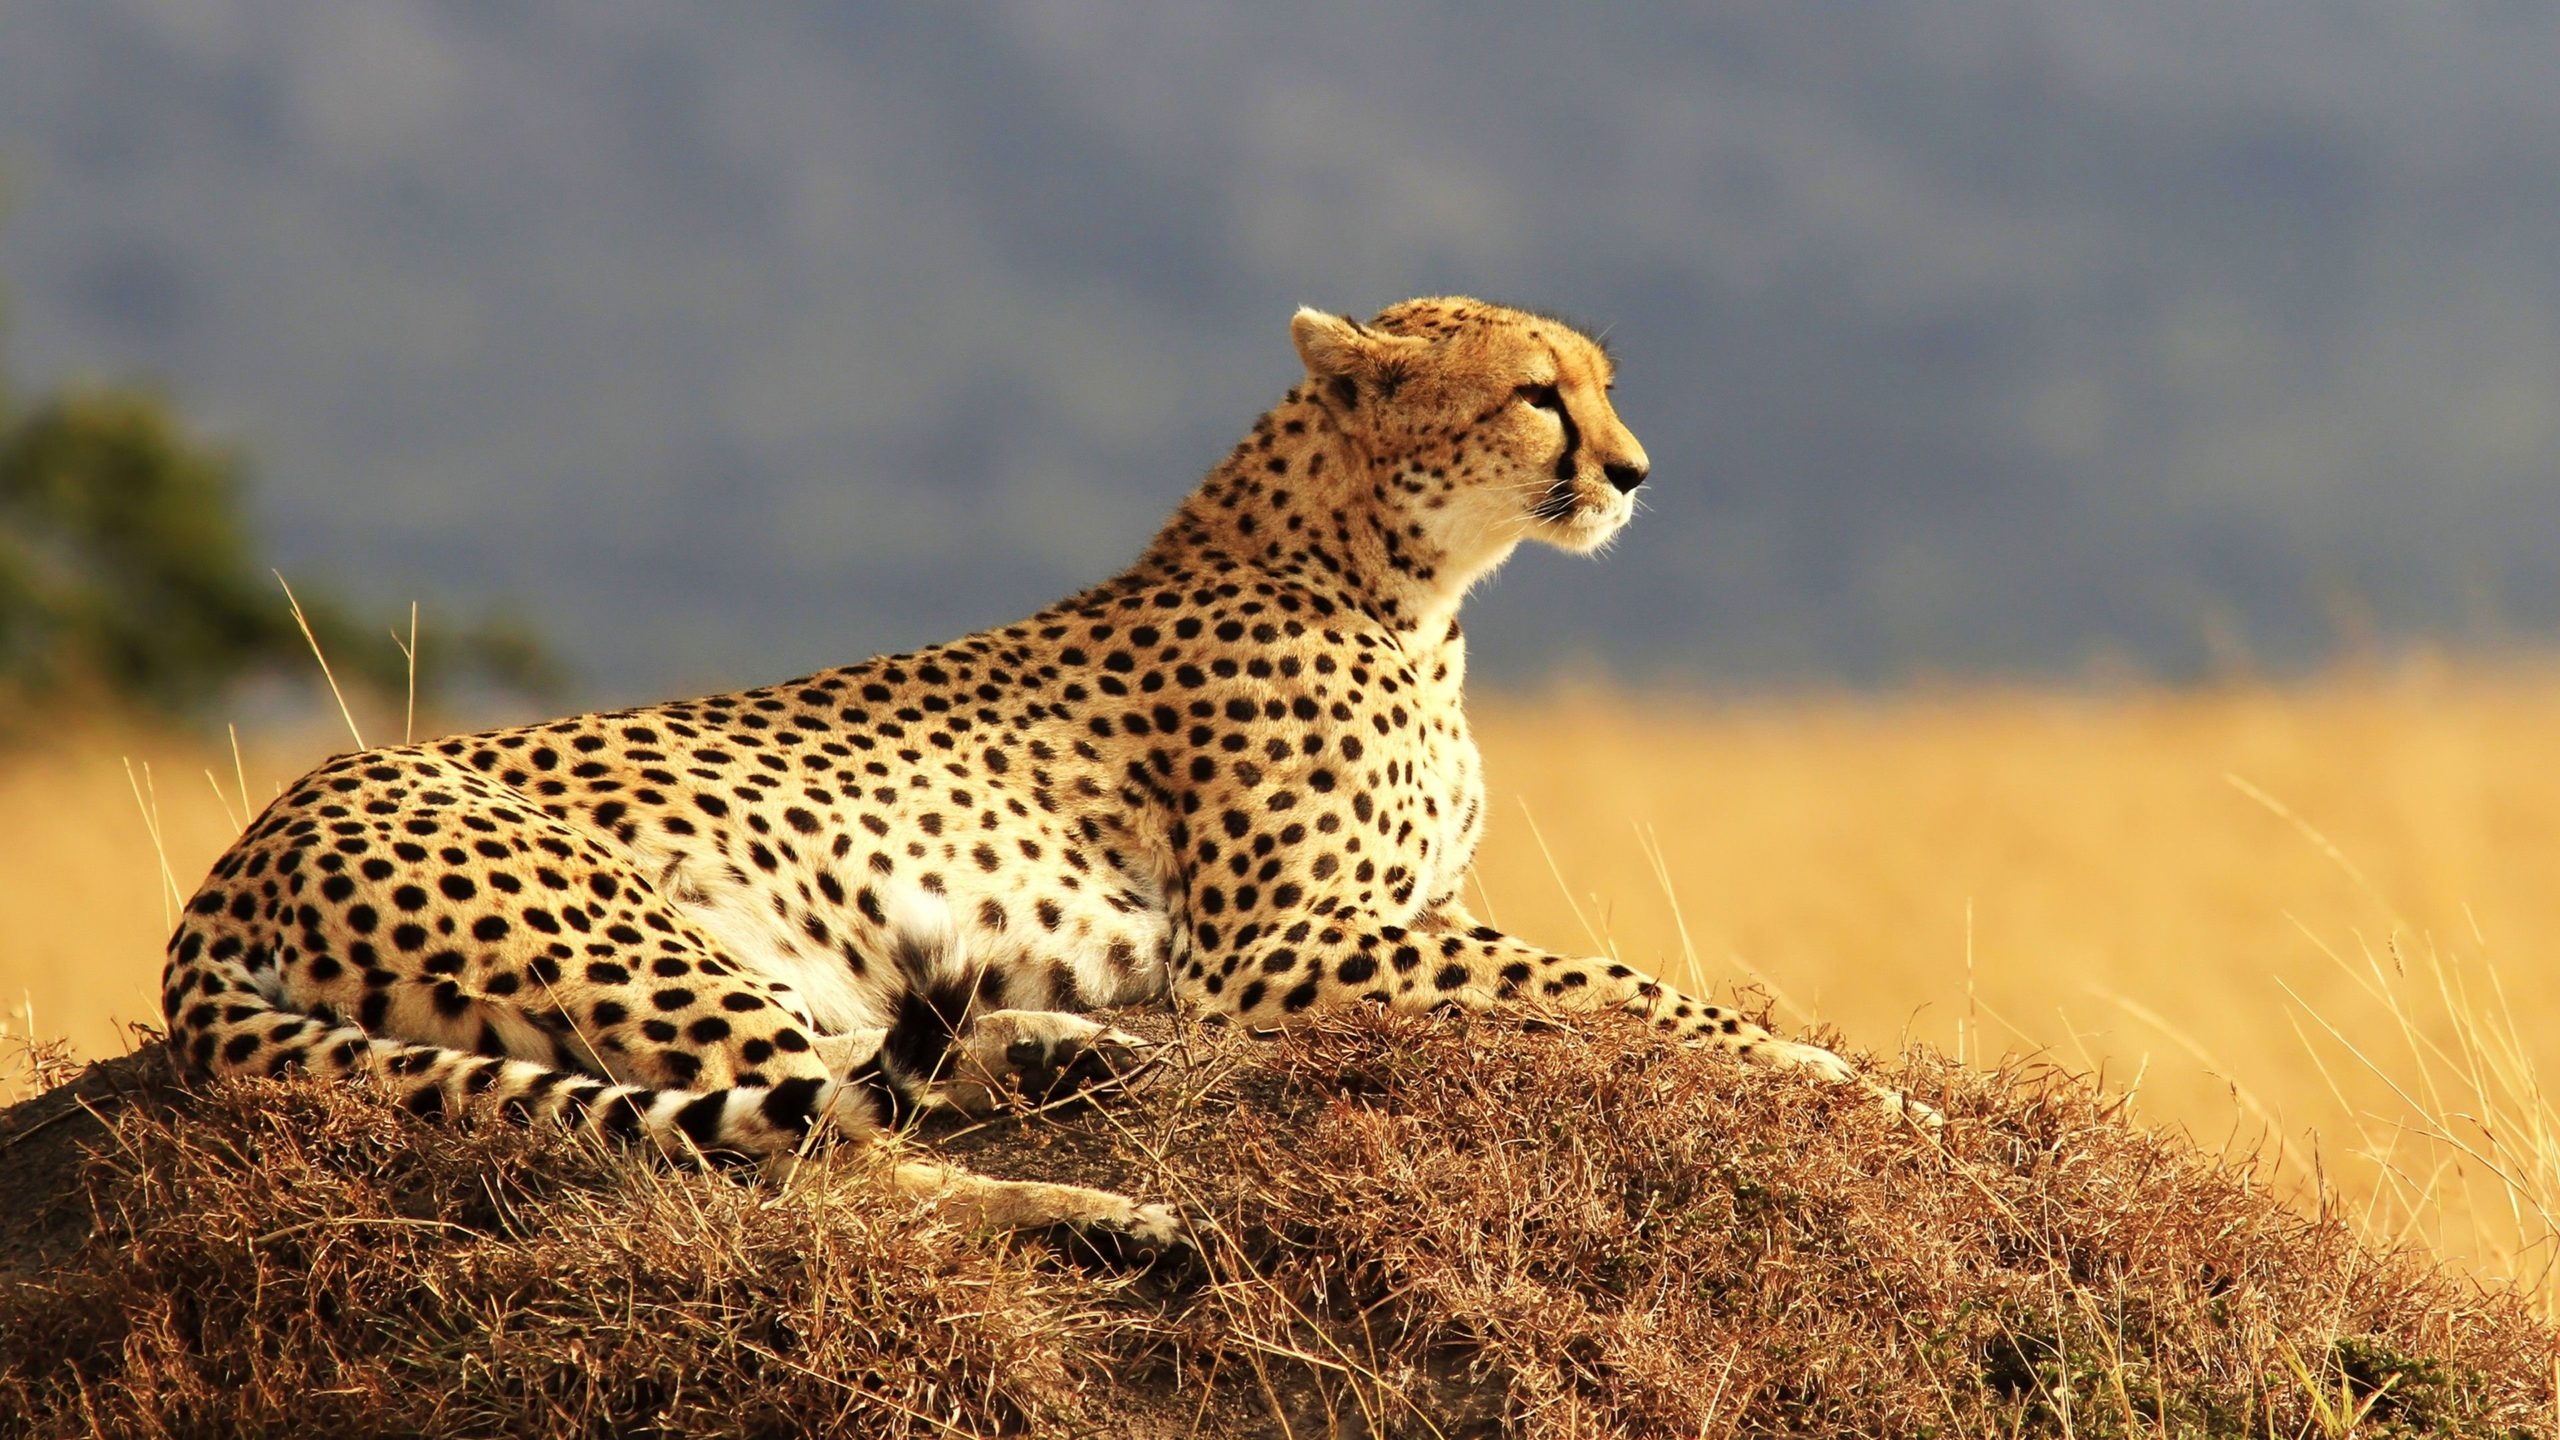 Sleek feline predator, Graceful and agile, Beautiful spotted fur, African wilderness, 2560x1440 HD Desktop